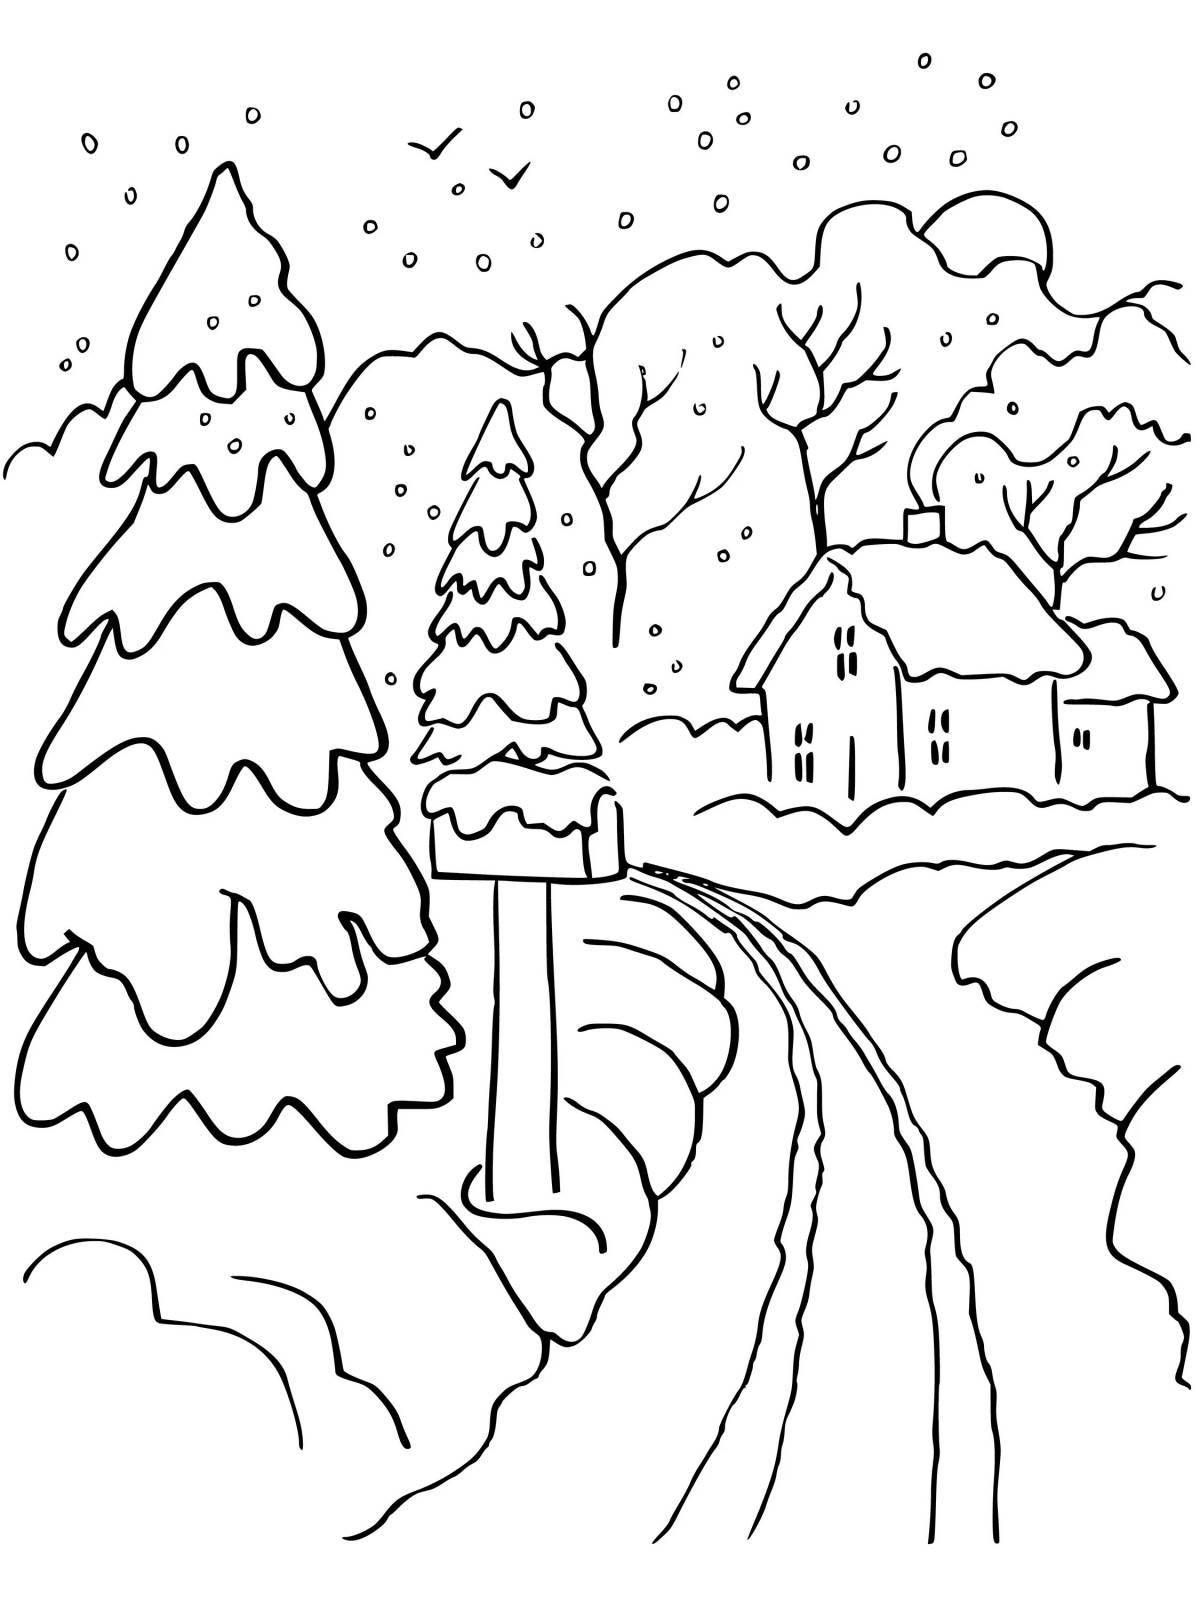 Live winter landscape coloring book